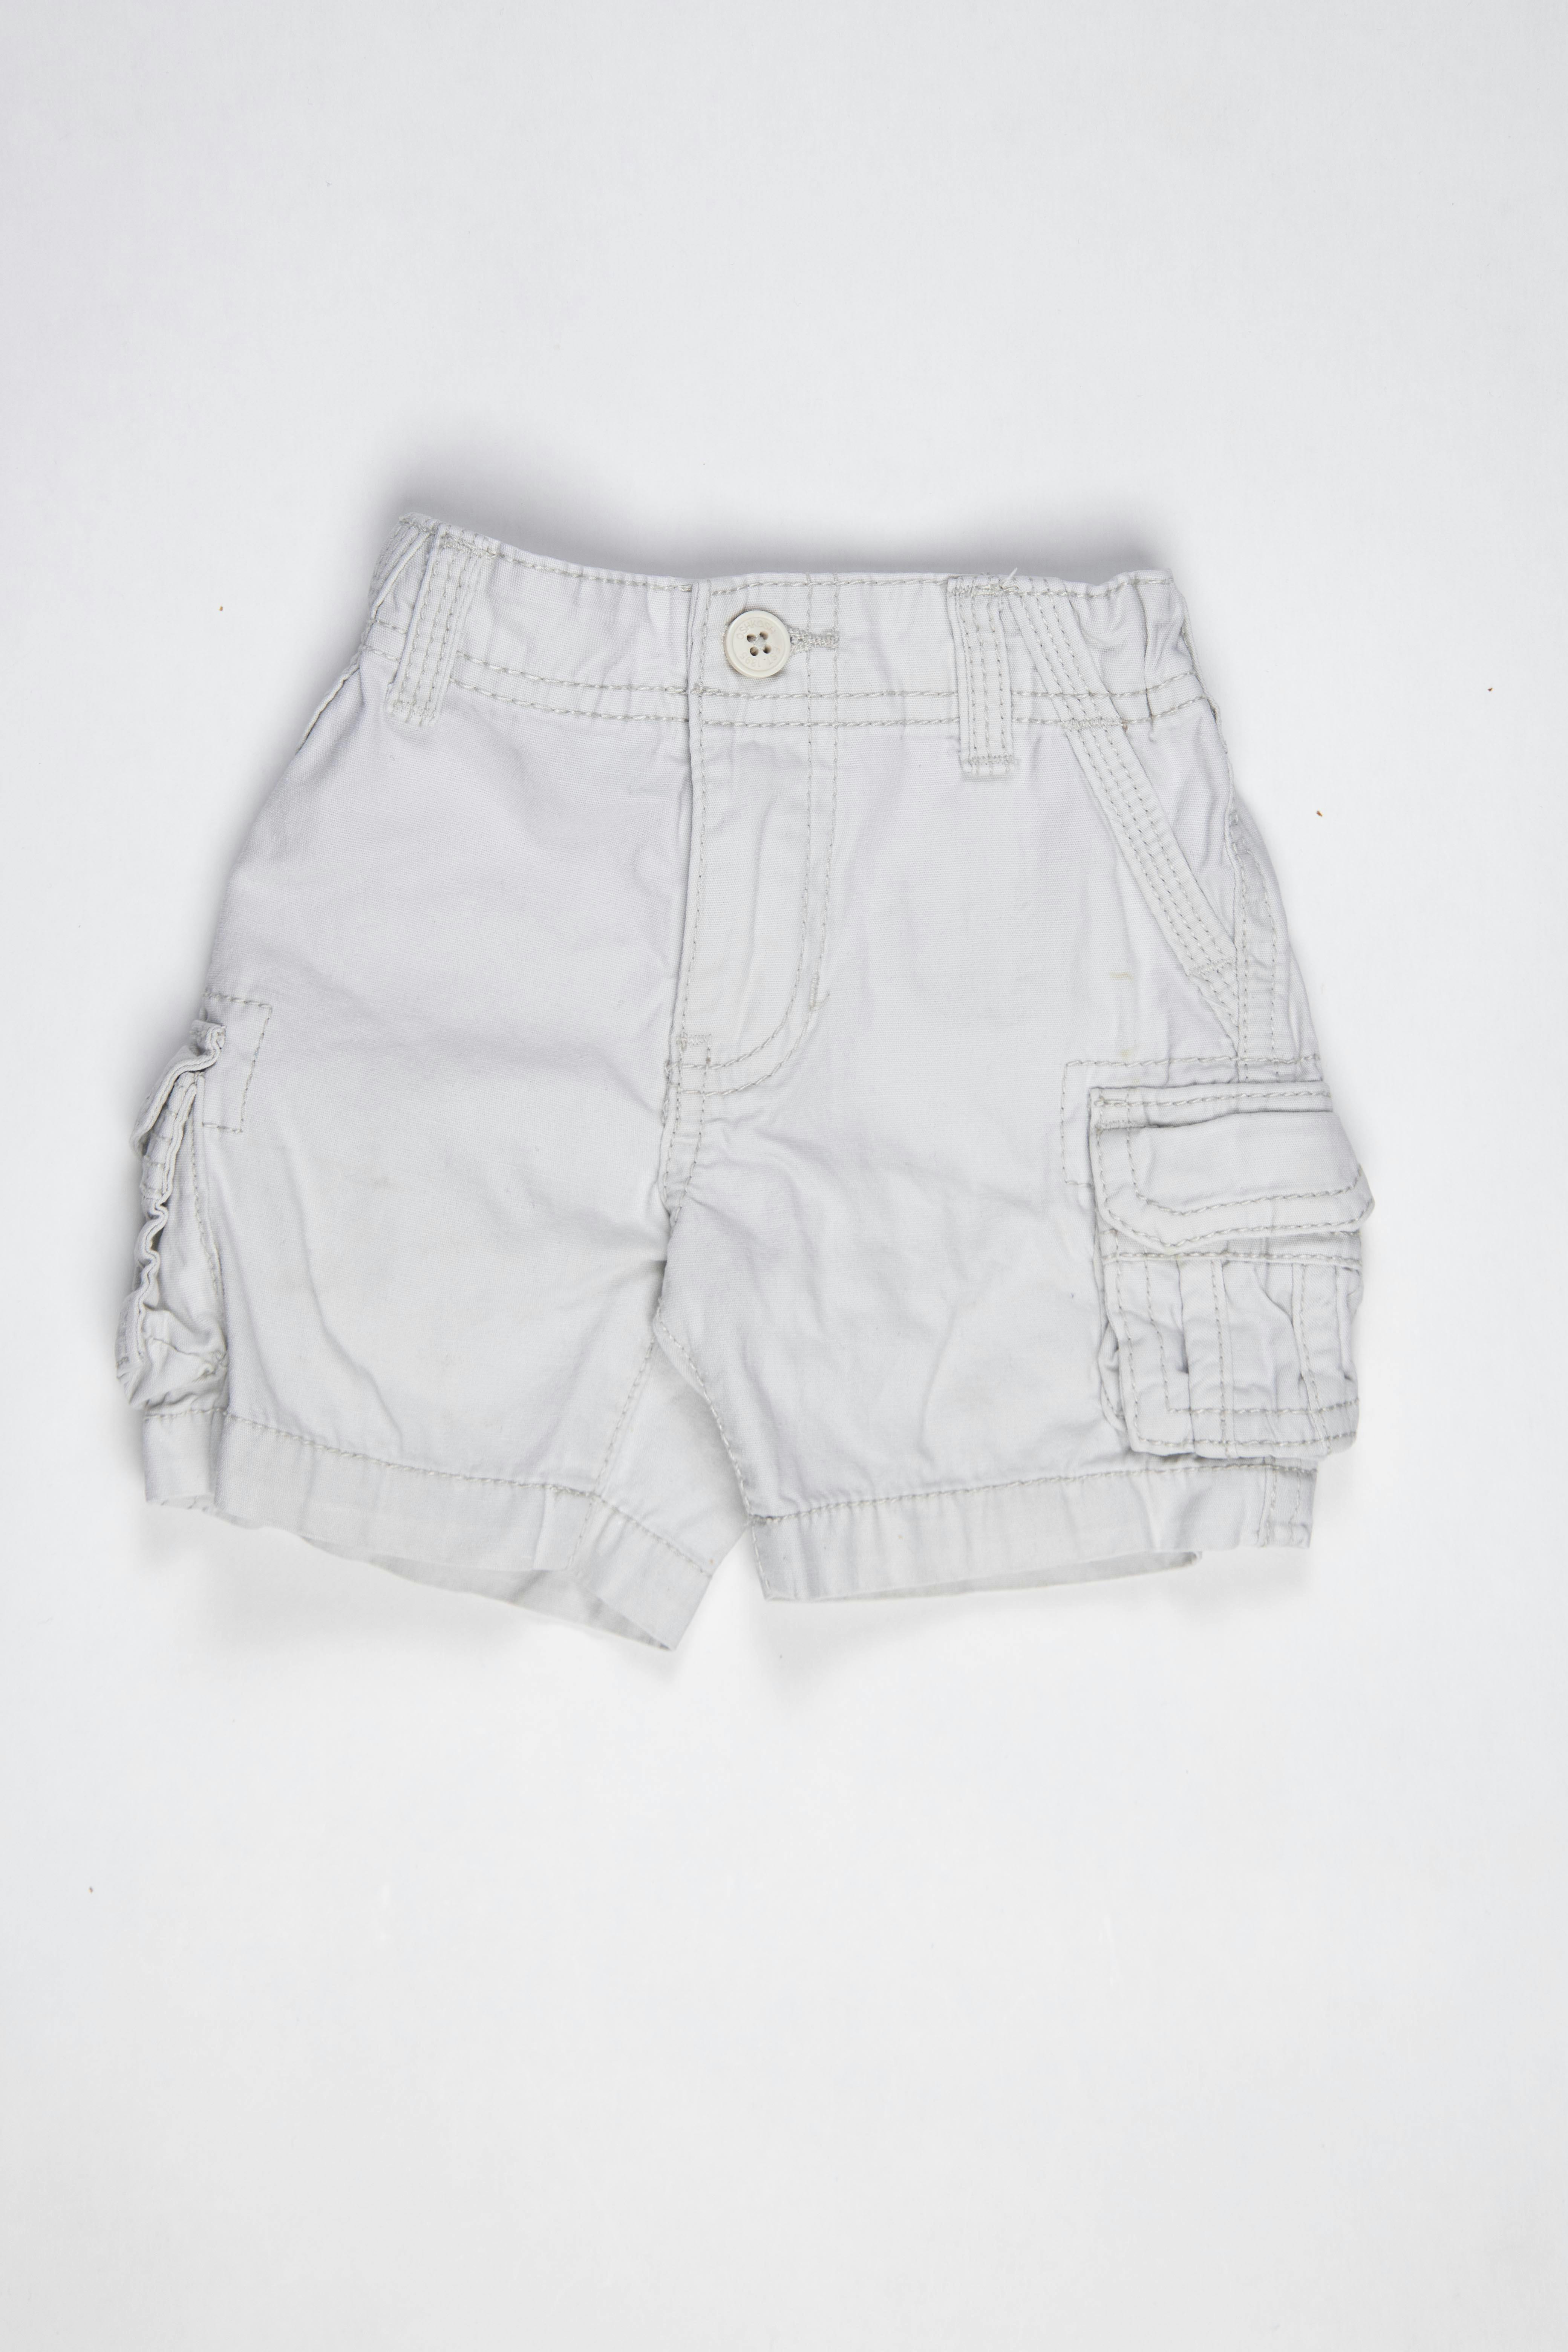 Short beige con bolsillos laterales, 100% algodón, elástico regulable - OshKosh